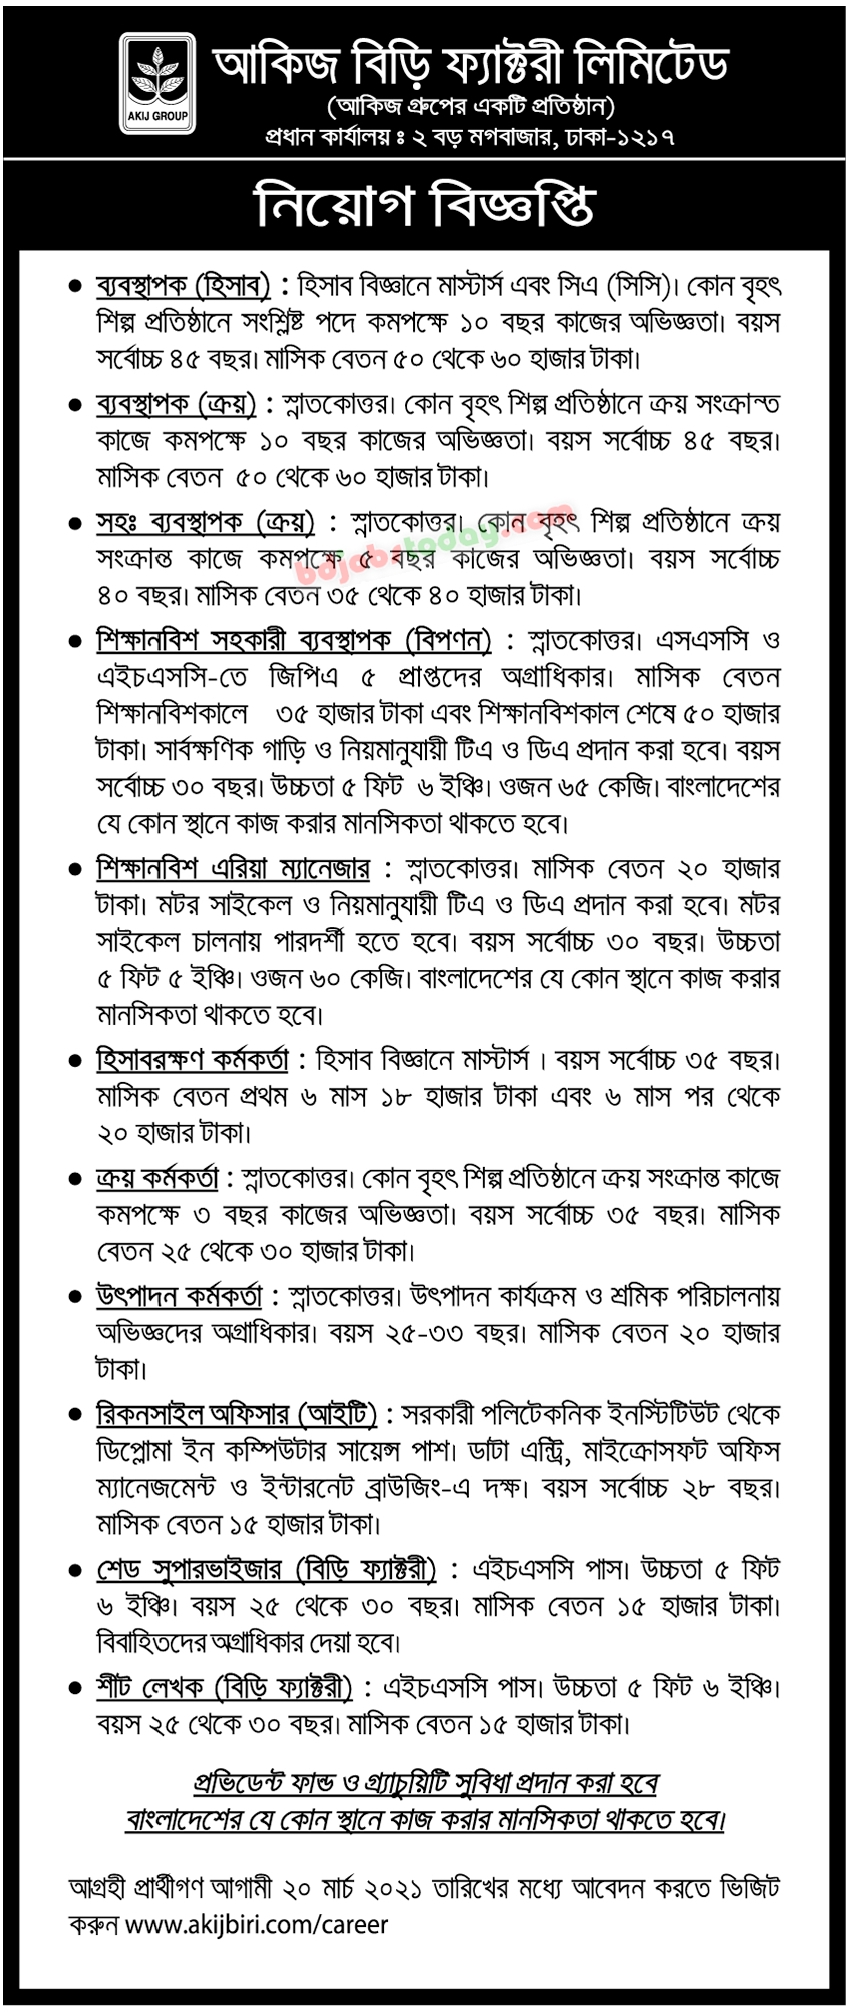 Prothom Alo Weekly Job Newspaper Chakri Bakri 12 March 2021 - প্রথম আলো চাকরির খবর - চাকরি বাকরি ১২ মার্চ ২০২১